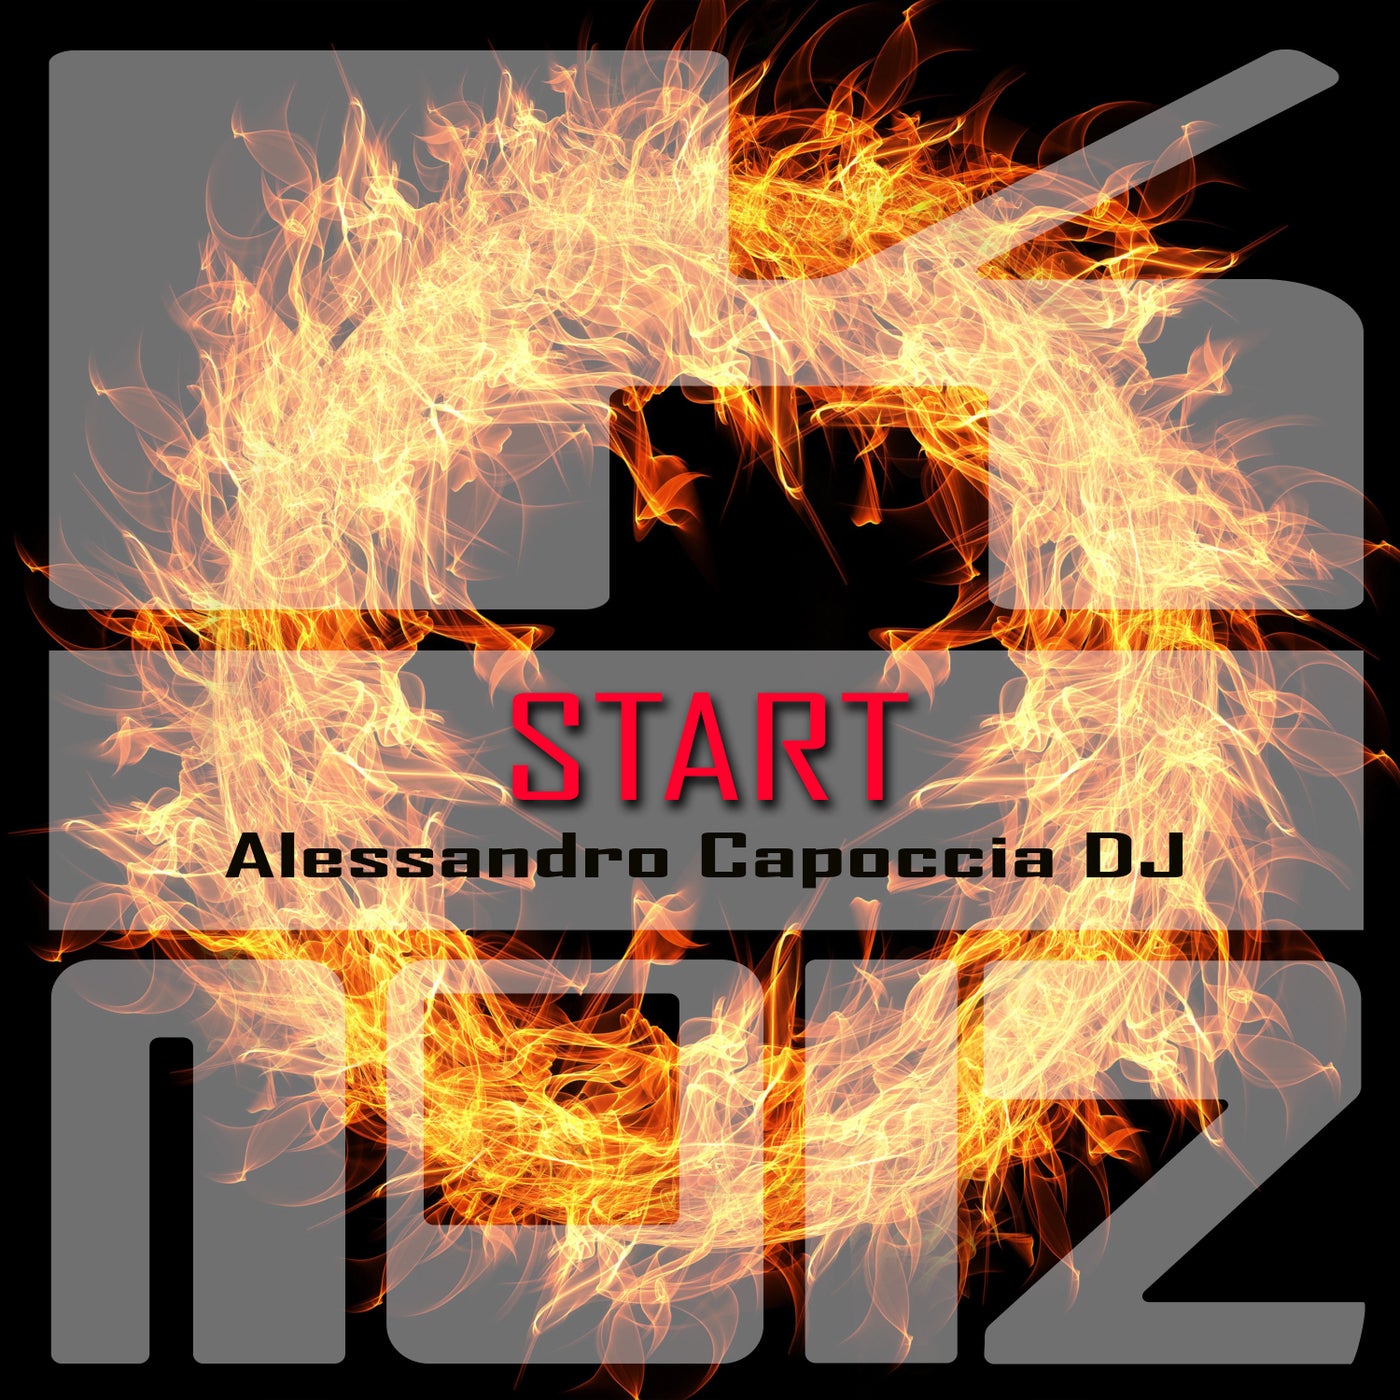 Alessandro Capoccia DJ - Start [K-Noiz]